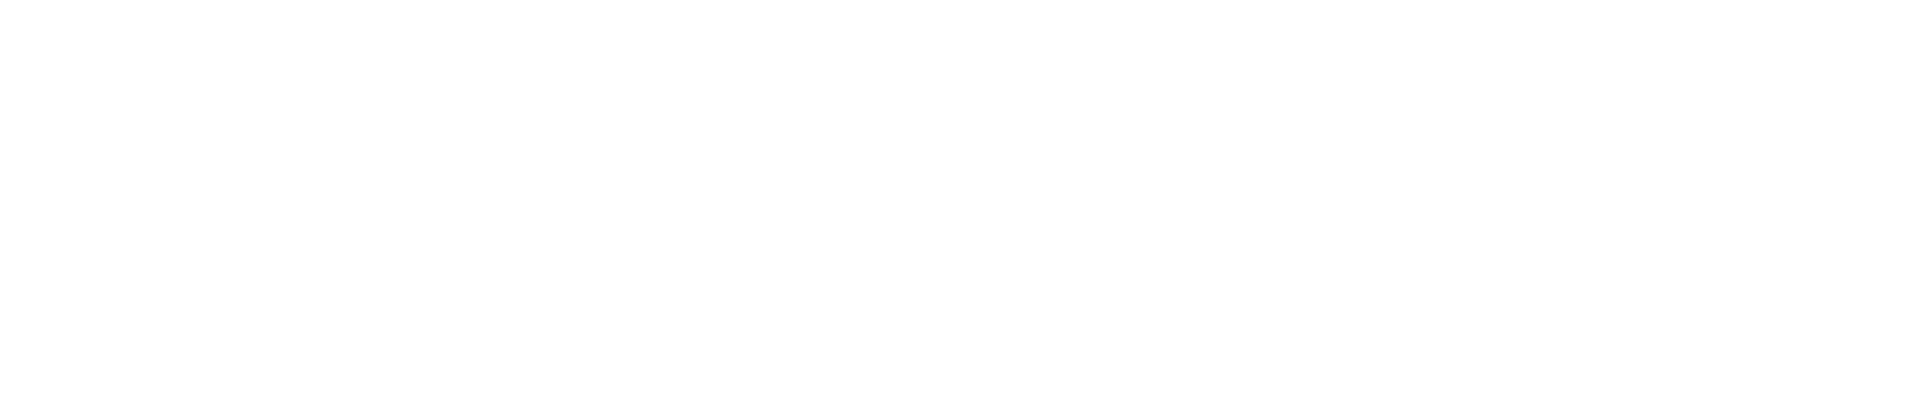 Best Technology Accelerator Winner - UK Business Tech Awards 2022, Technology Innovation Champion Finalist - Innovation Awards 2023, Accelerator of the Year Finalist - UKBAA Angel Investment Awards 2023